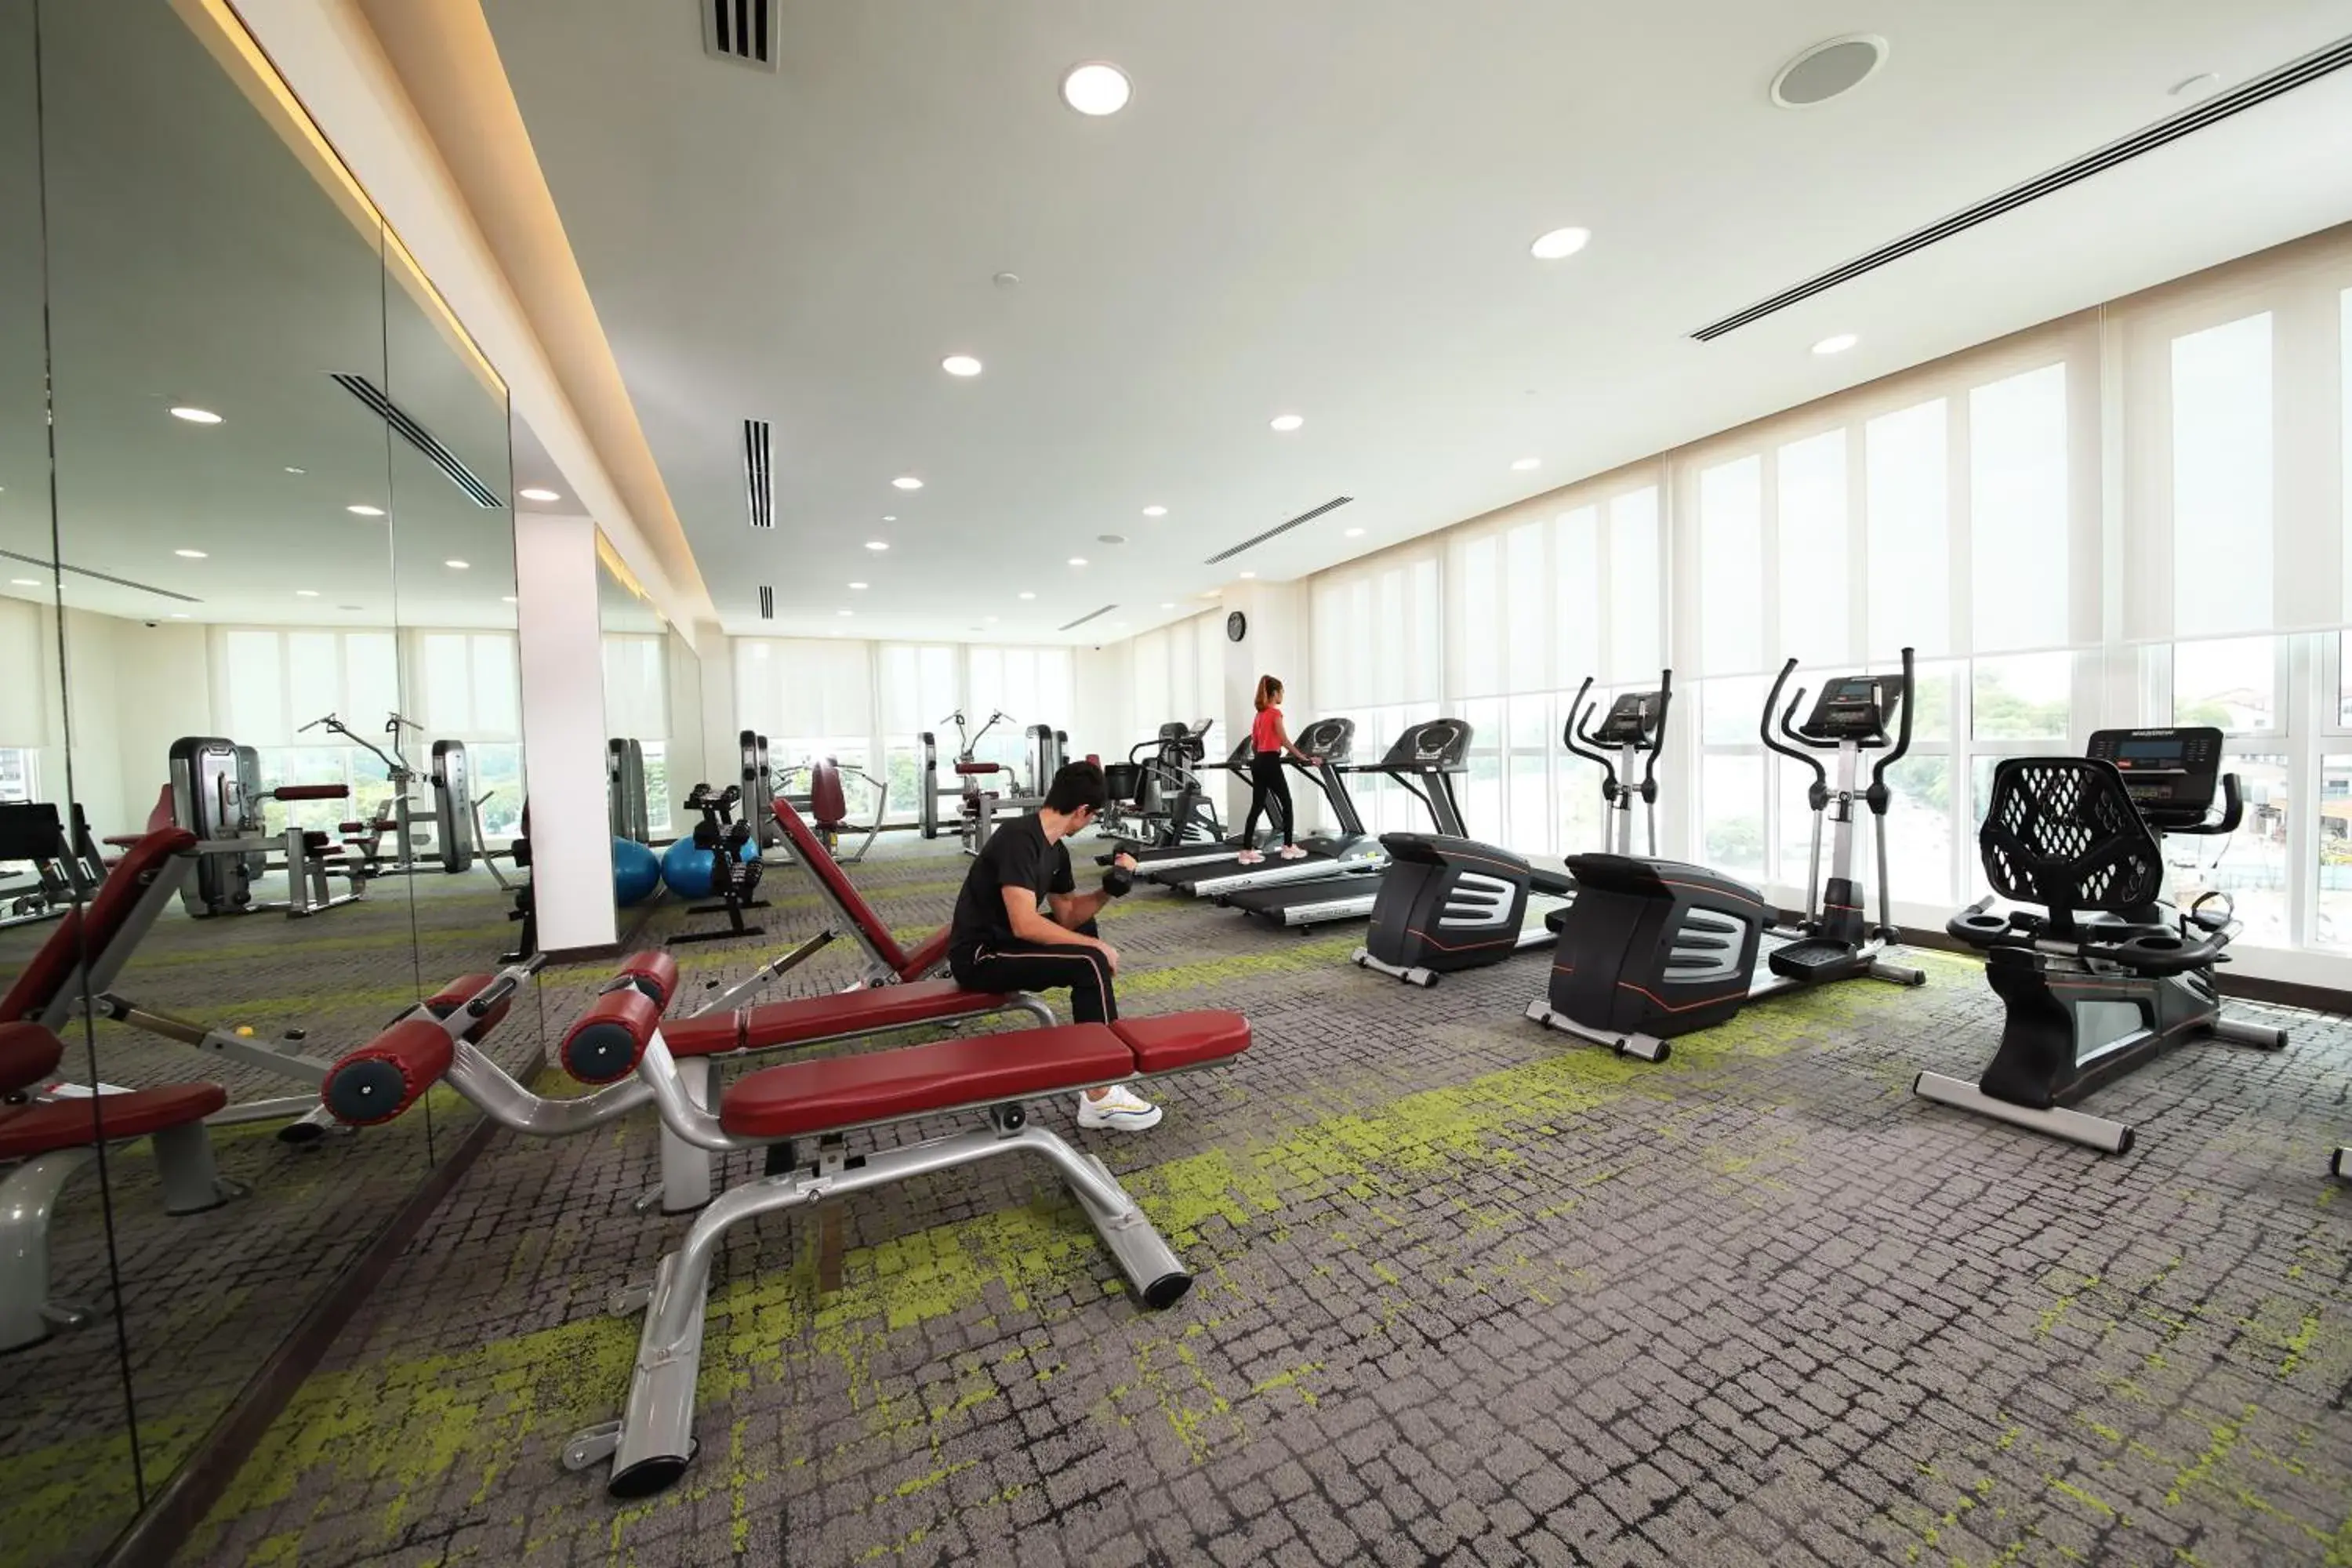 Fitness centre/facilities, Fitness Center/Facilities in Capri by Fraser Johor Bahru